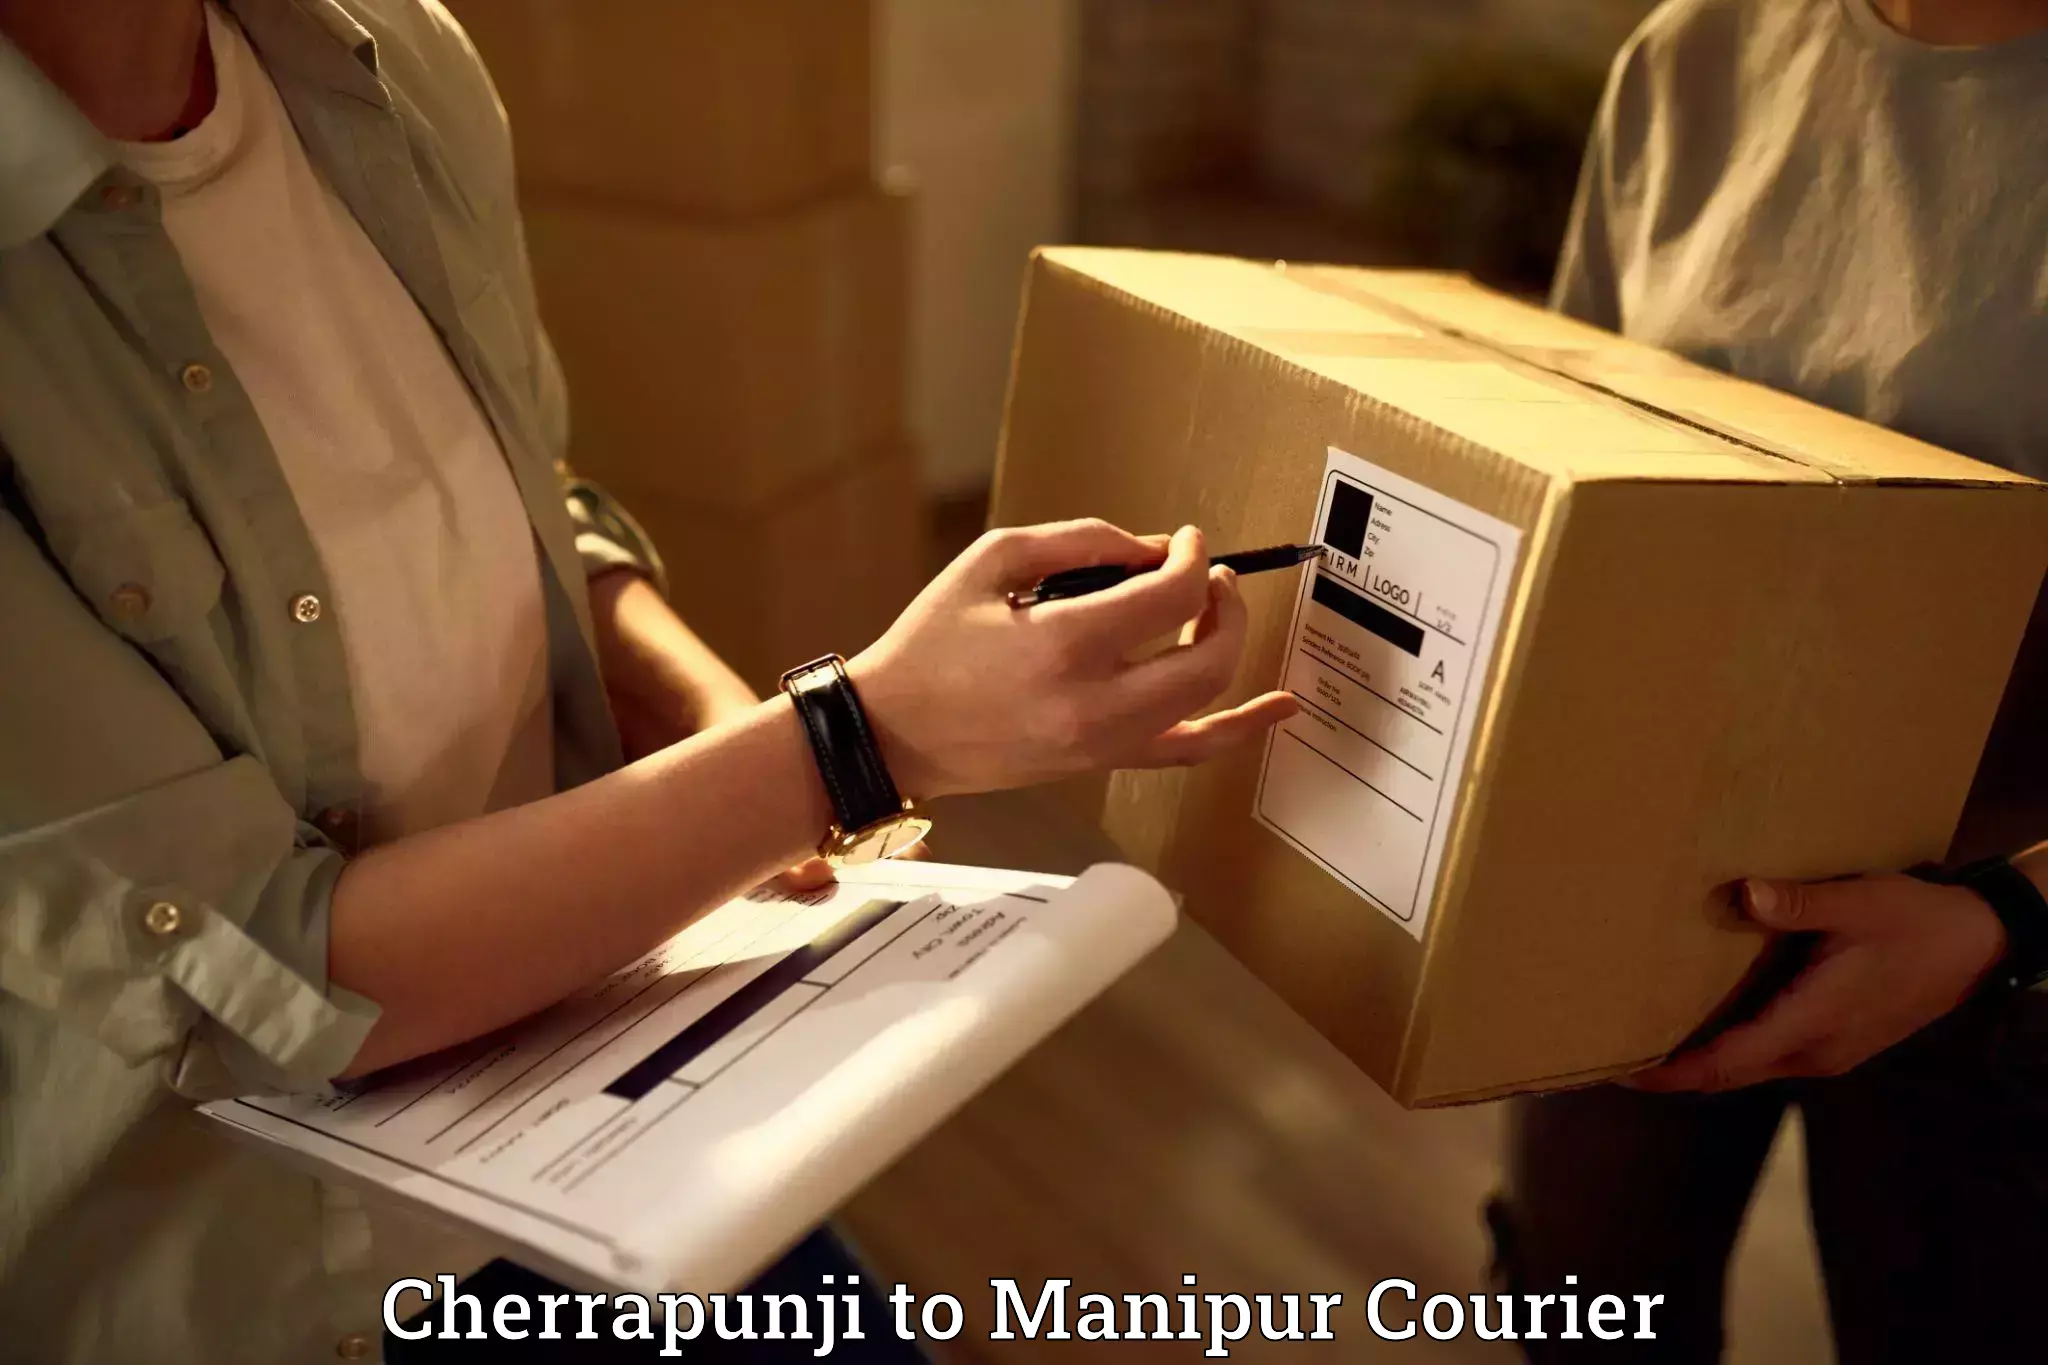 Professional moving company Cherrapunji to Imphal